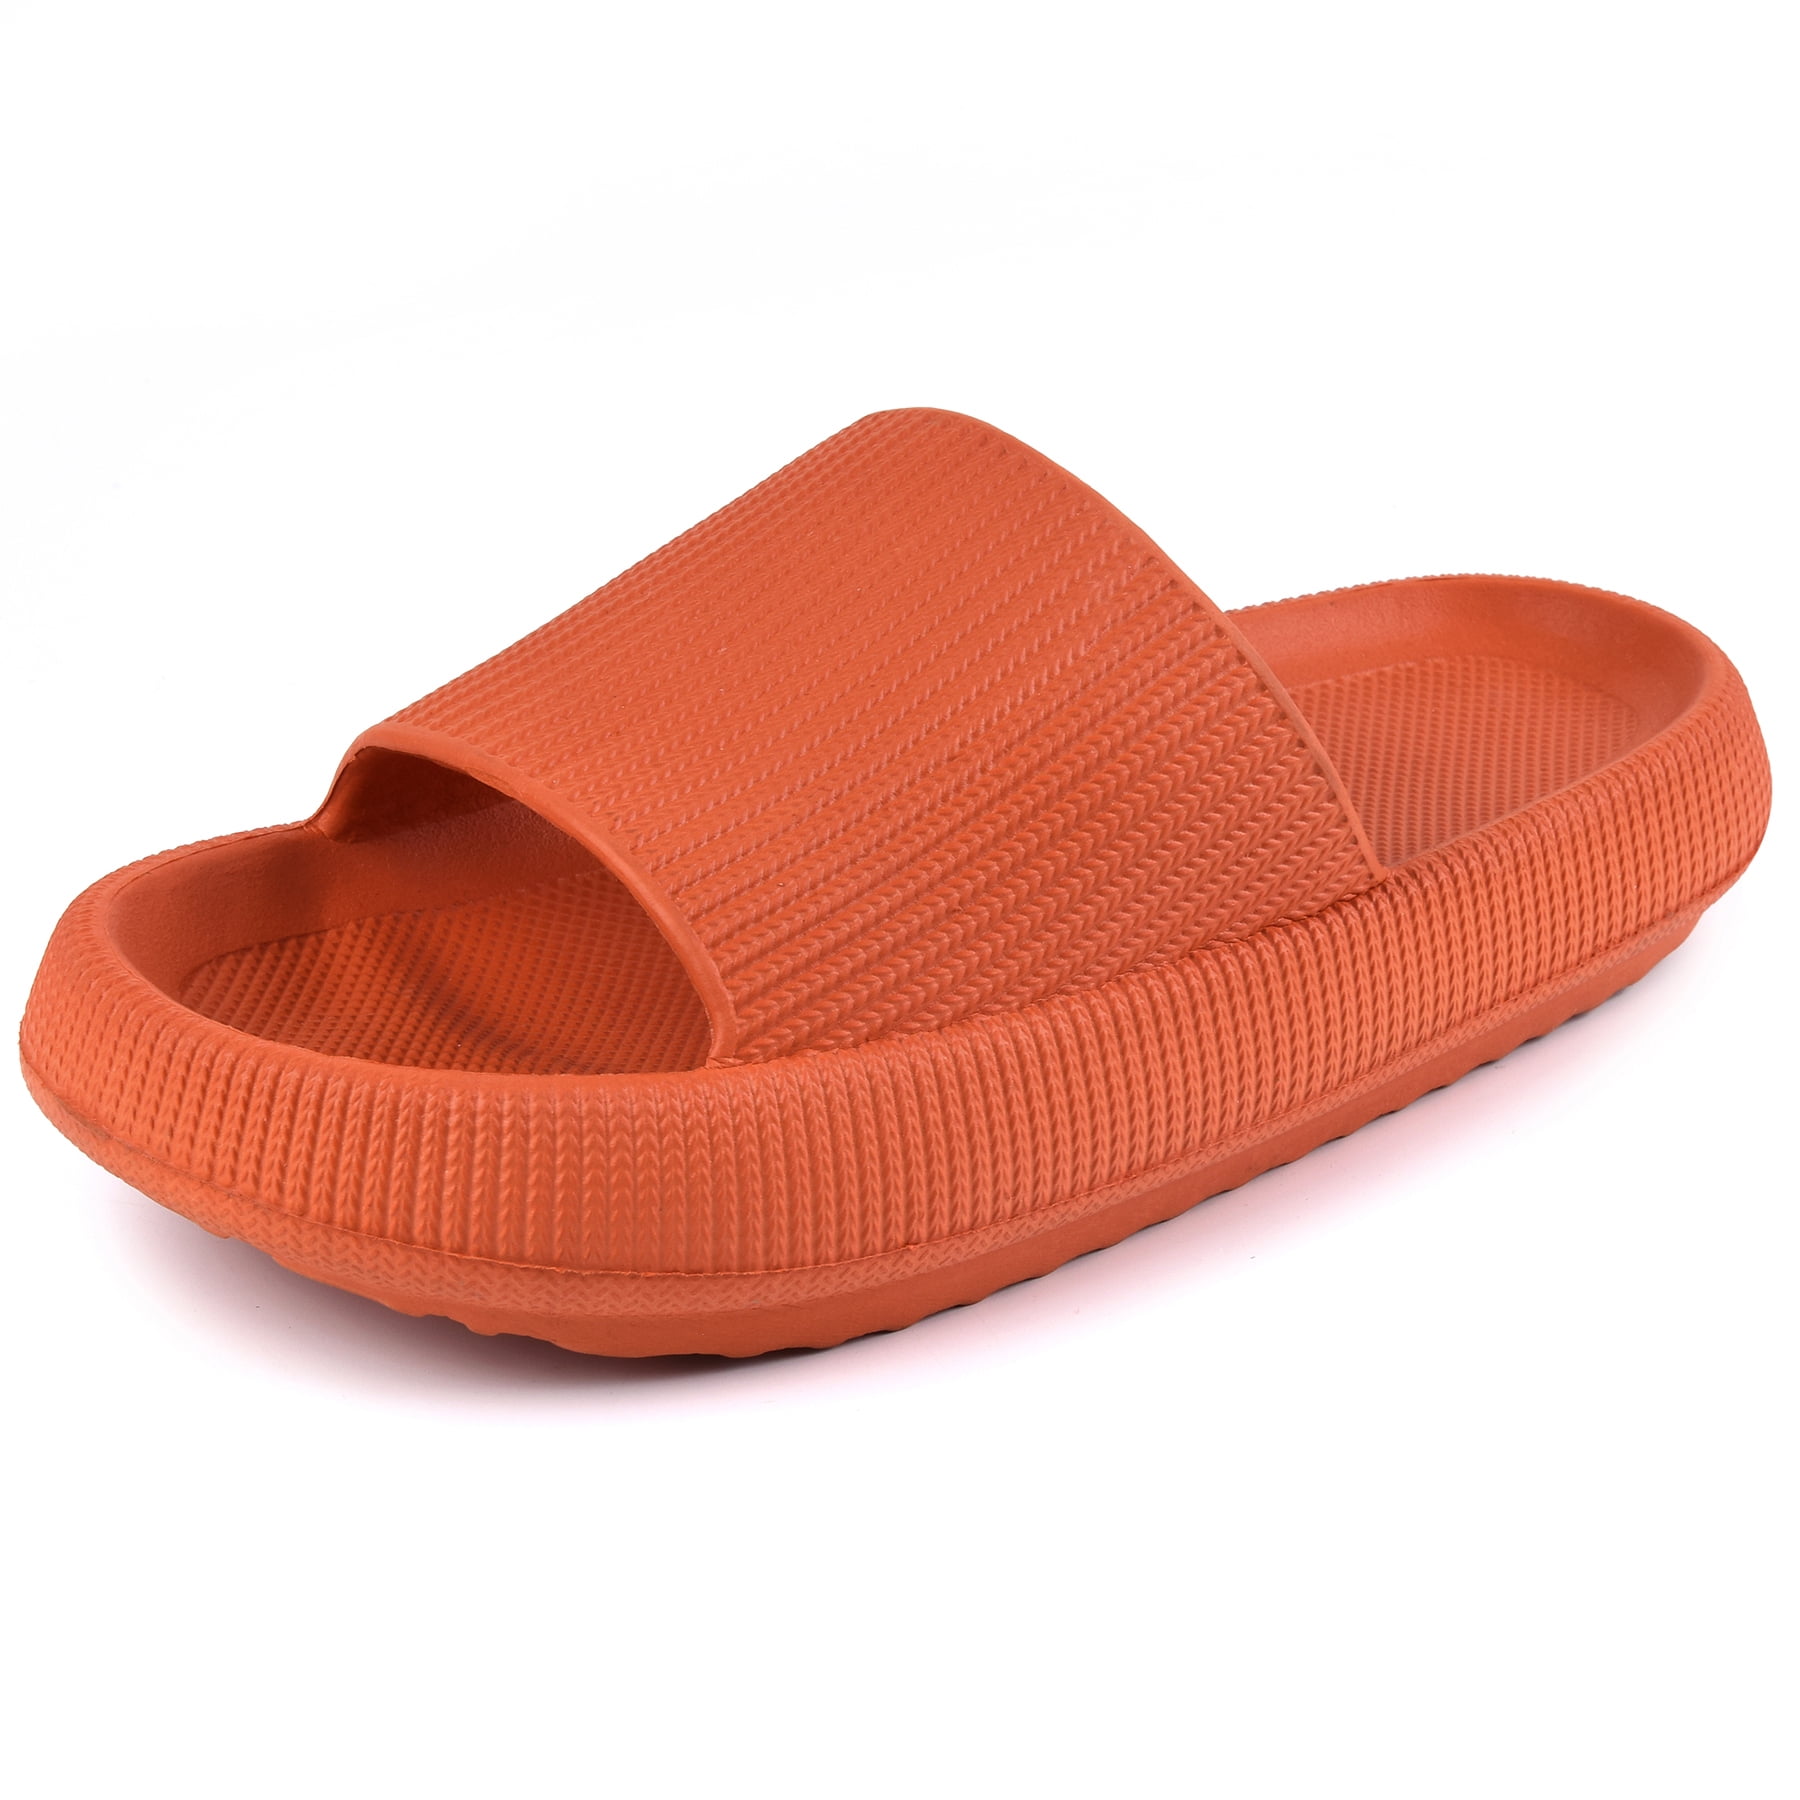 Vegan Friendly Soft Fun Male Sandals Crazy Shoes Mens Shoes Sandals Slides Orange Trippy Slides Abstract Liquify Trip Men's Slide Sandals Rave EDM Festival Footwear 